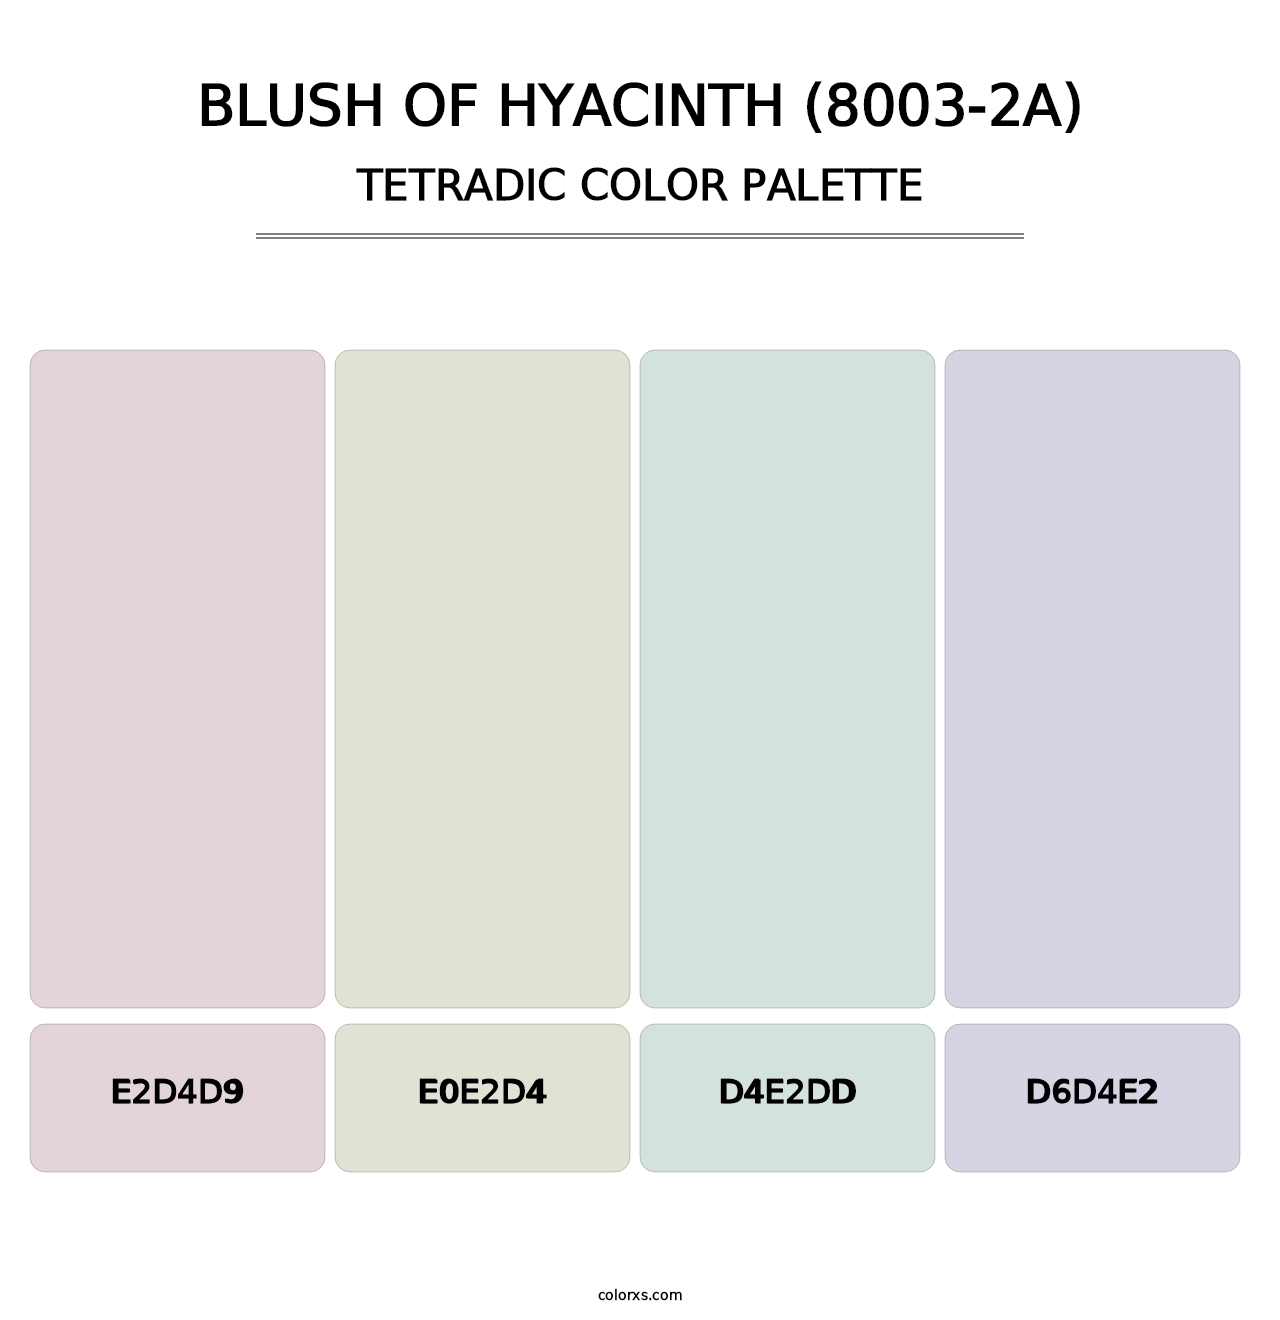 Blush of Hyacinth (8003-2A) - Tetradic Color Palette